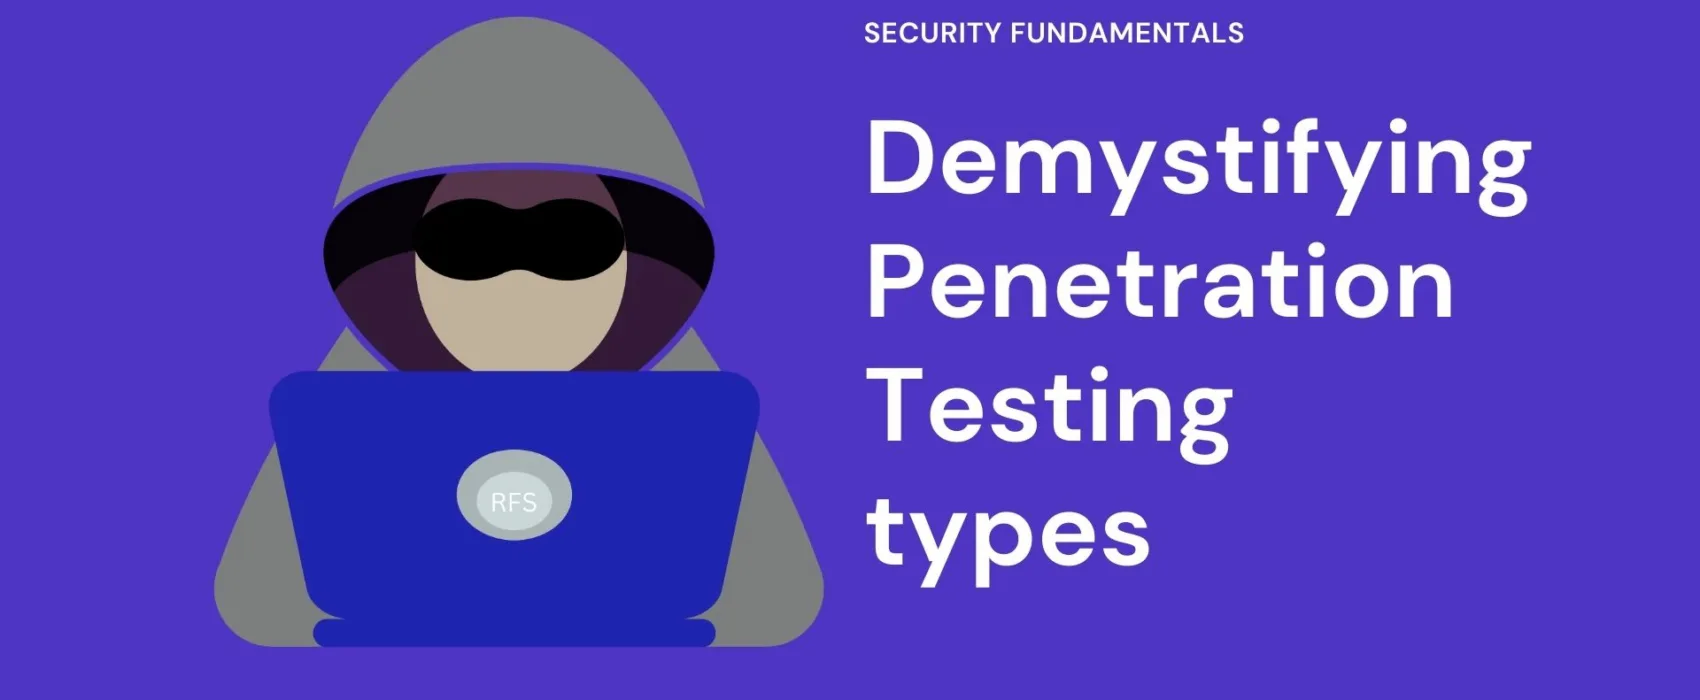 penetration testing types